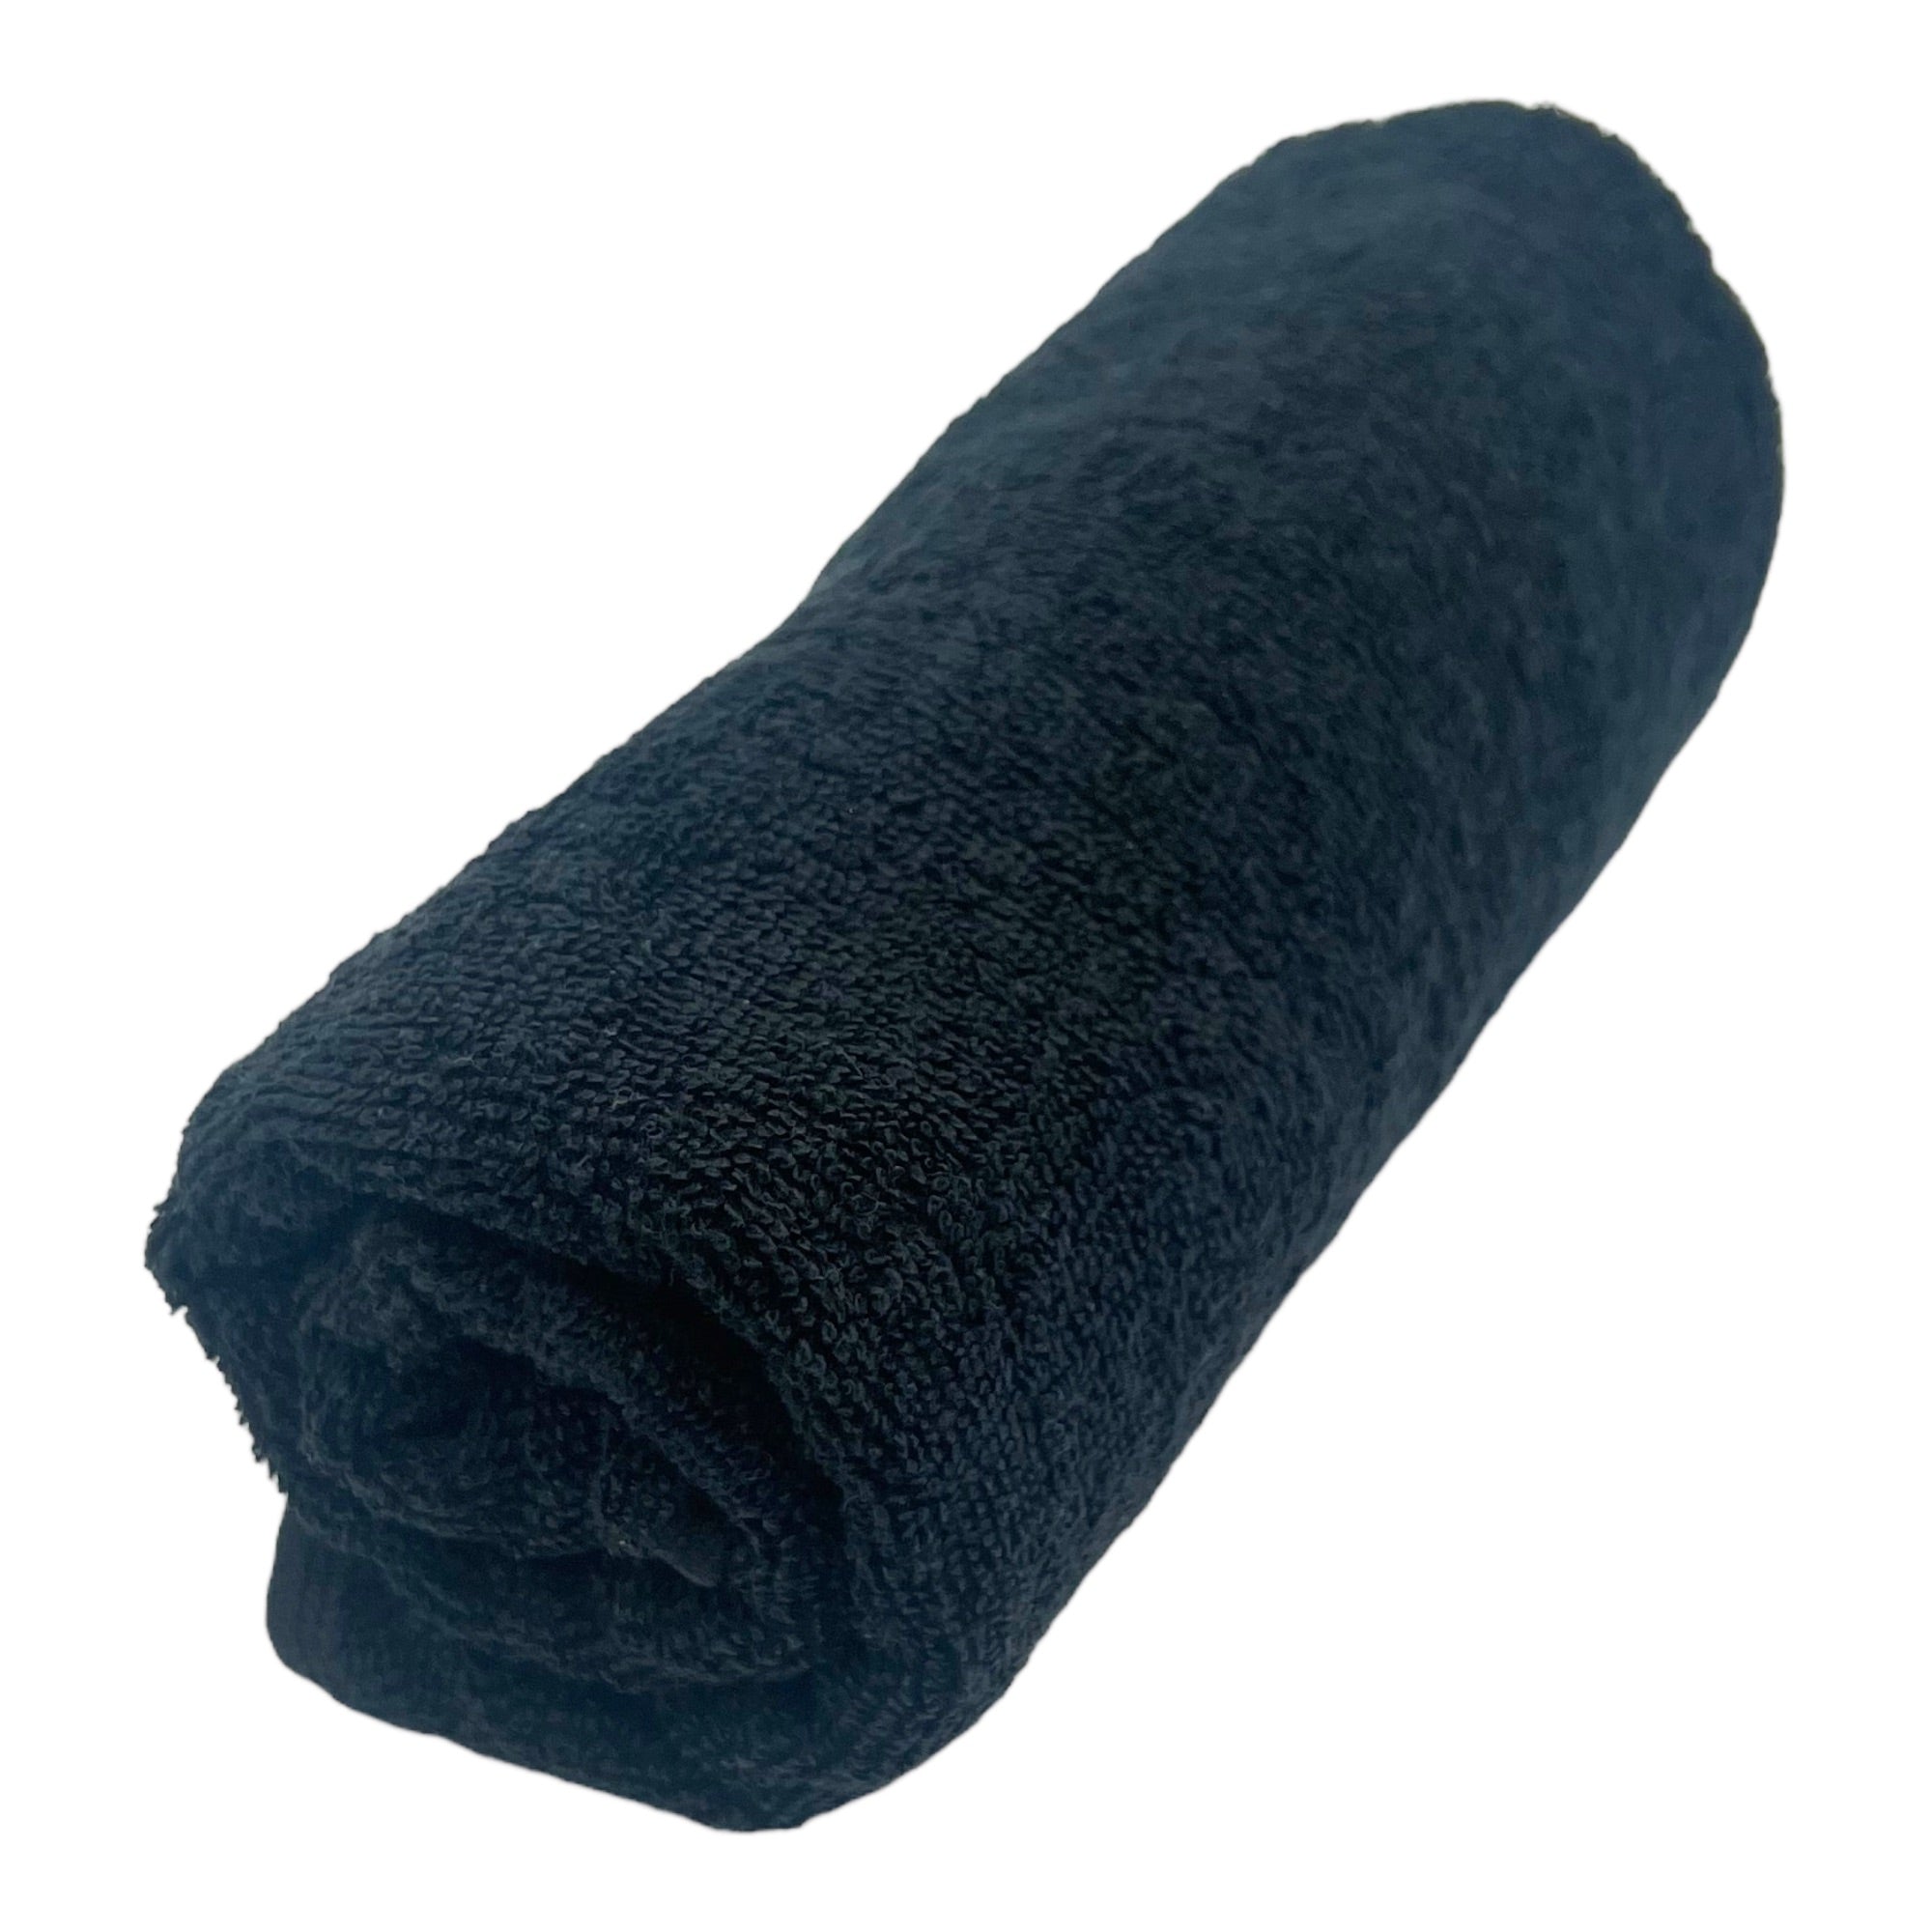 Gabri - Barber Hair Towel Black 100% Cotton 85x50cm